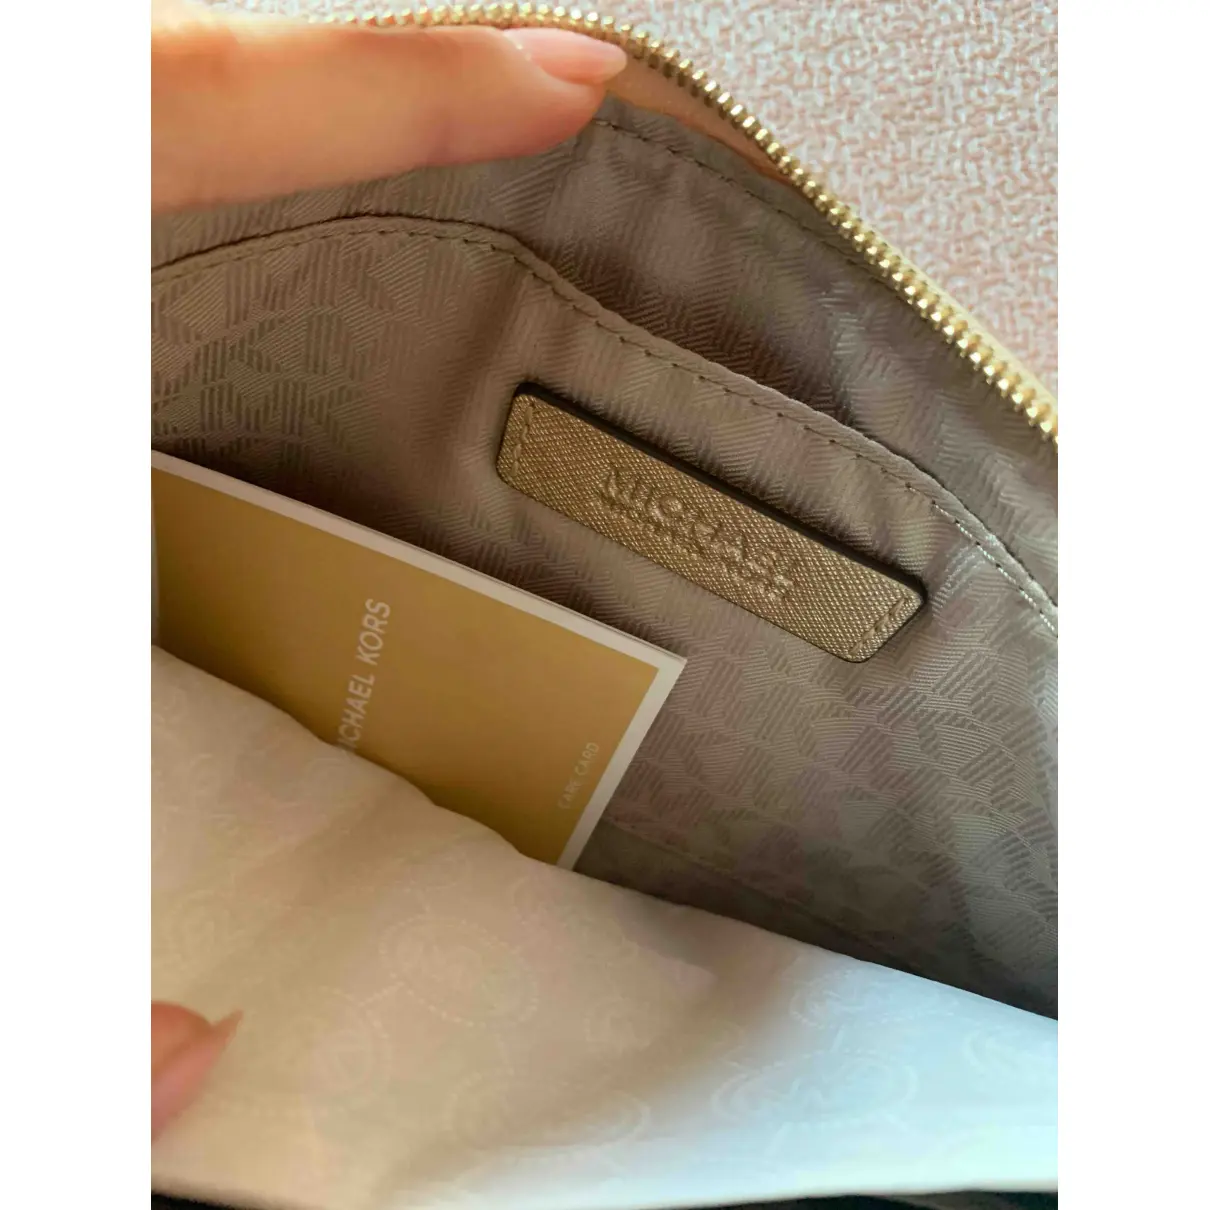 Luxury Michael Kors Clutch bags Women